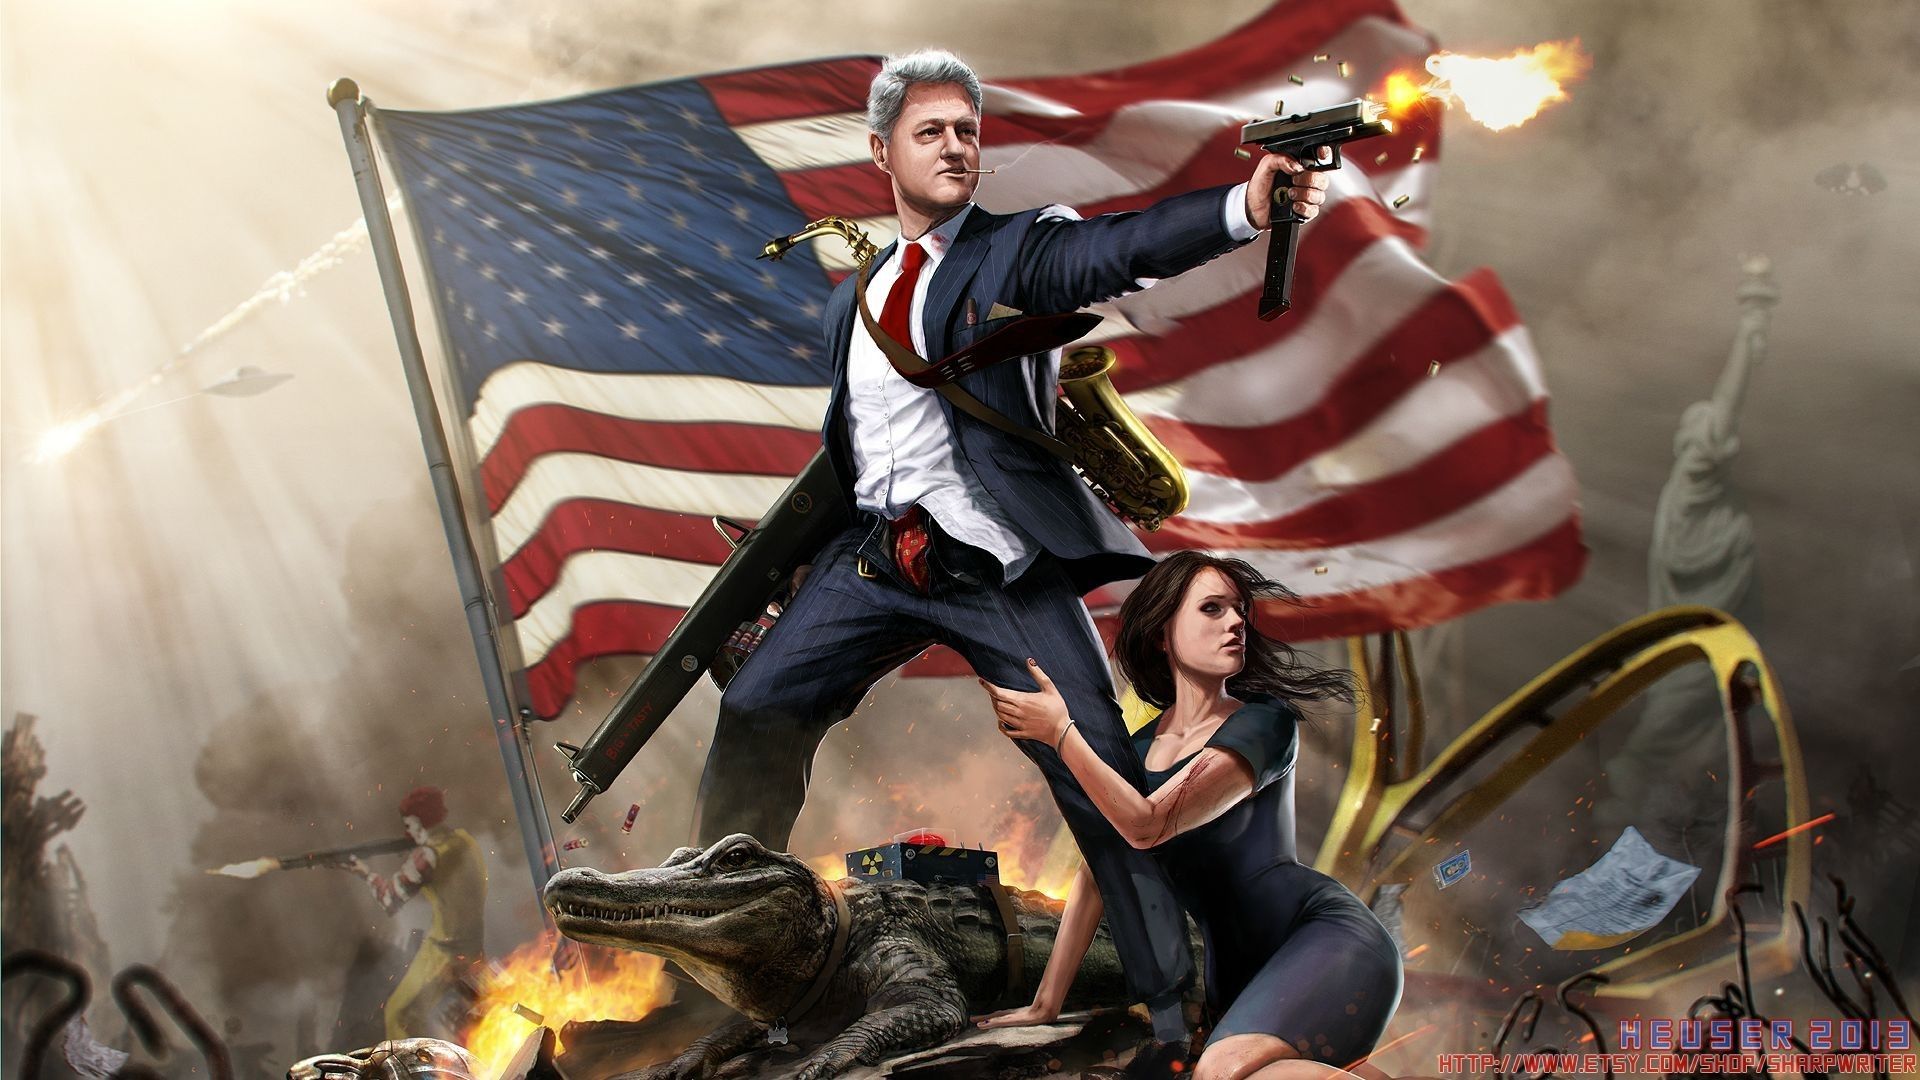 Badass America Wallpaper. Background. Photo. Image